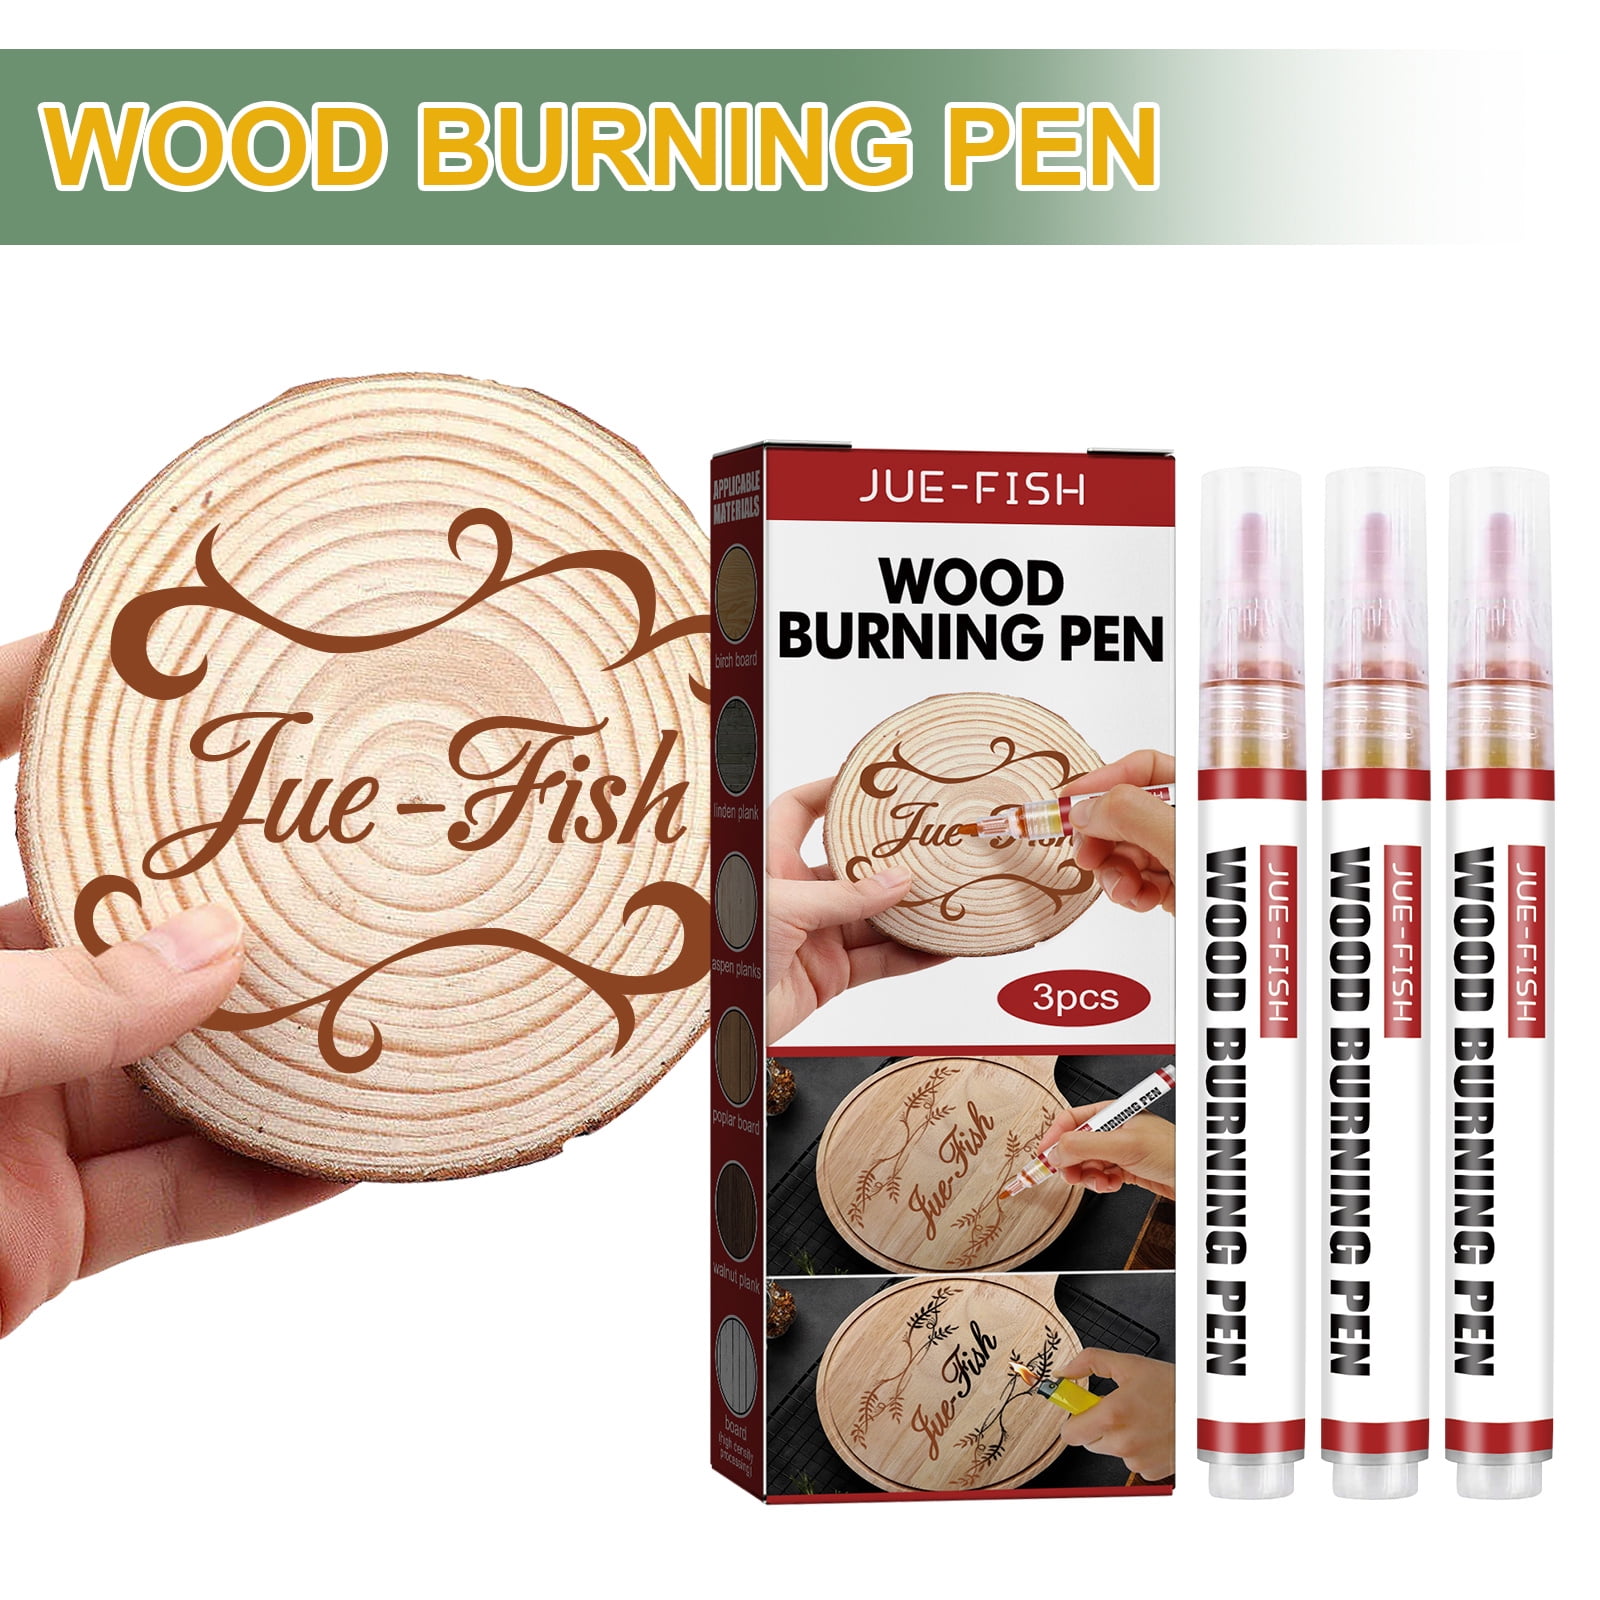 Efficient Wood Burning Pen, Chemical Wood Burning Wood Burner Tool